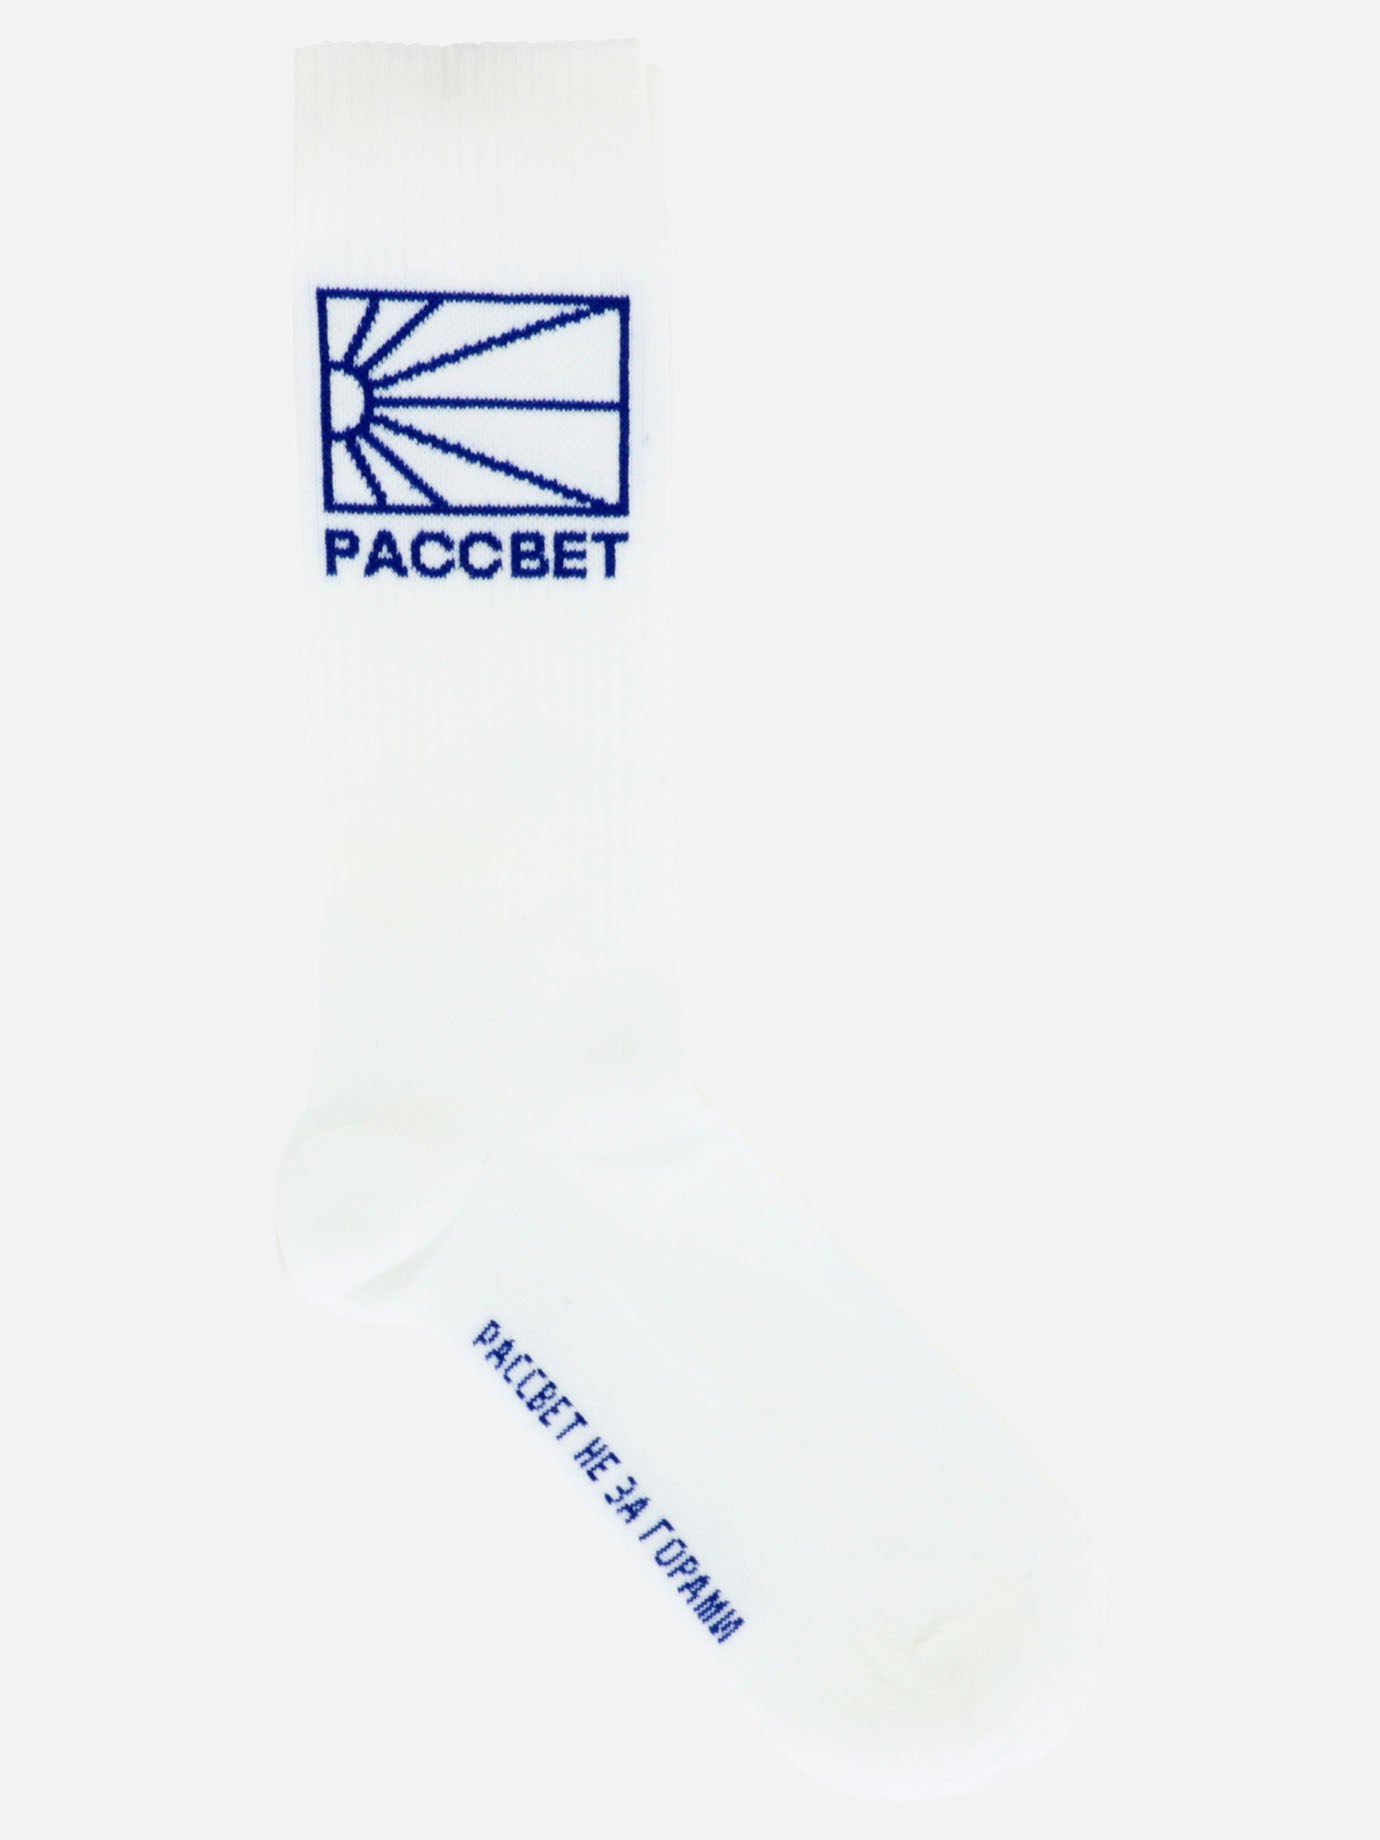  Logo 1  socksby Paccbet - 4